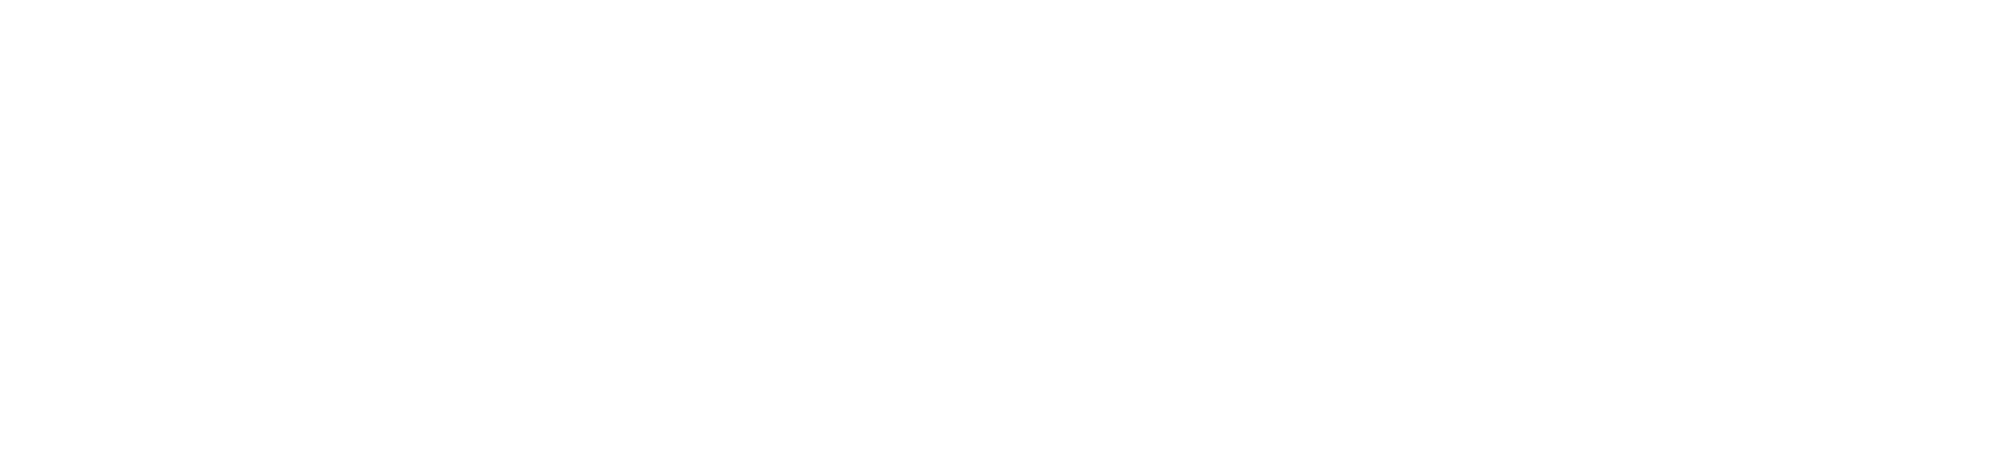 SELTIC-logo_tag_wht-w2000